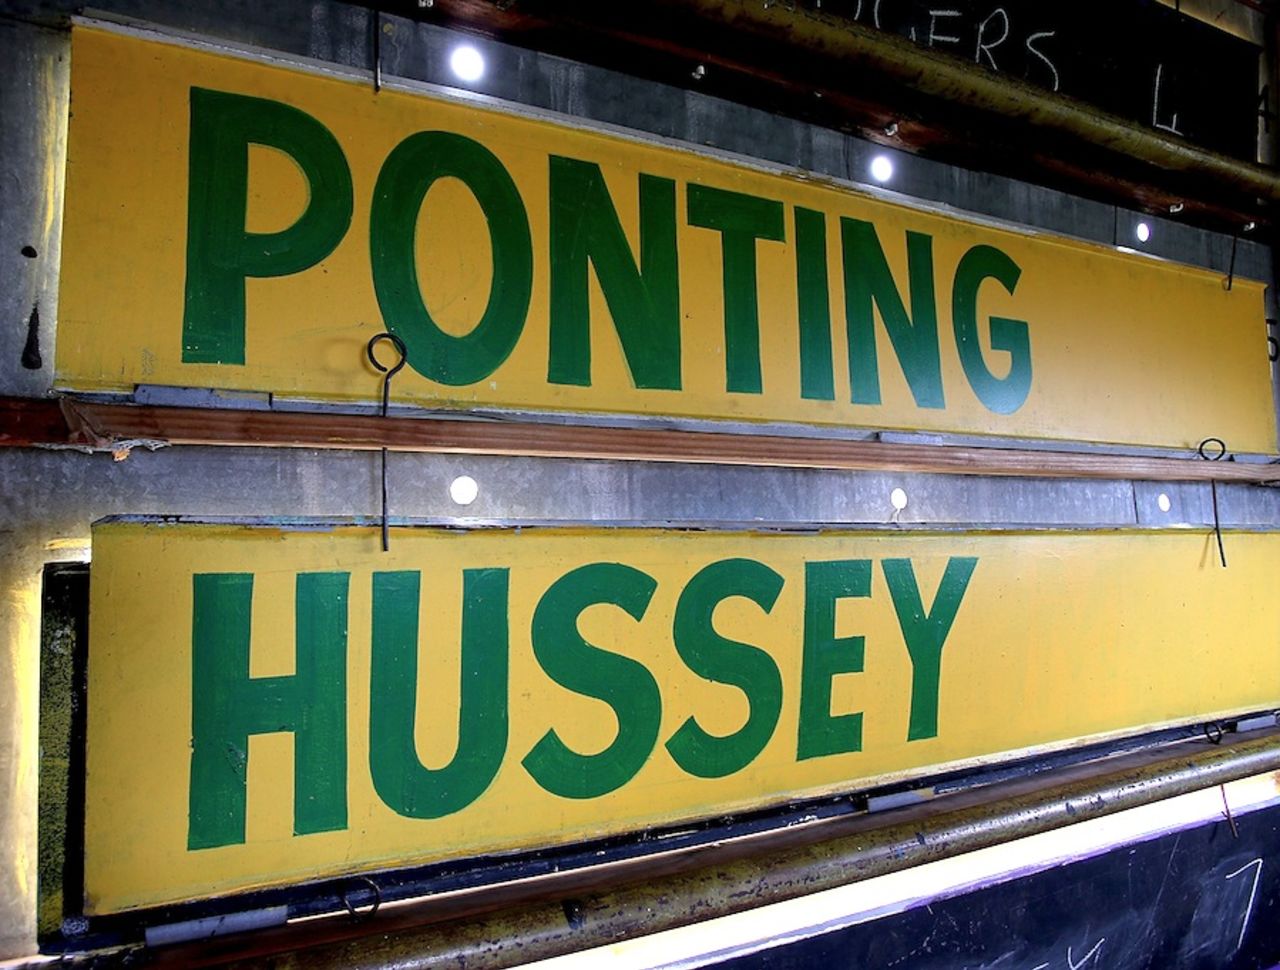 Ricky Ponting and Michael Hussey name plates inside WACA scoreboard, Western Australia v Tasmania, Sheffield Shield, Perth, February 22, 2013